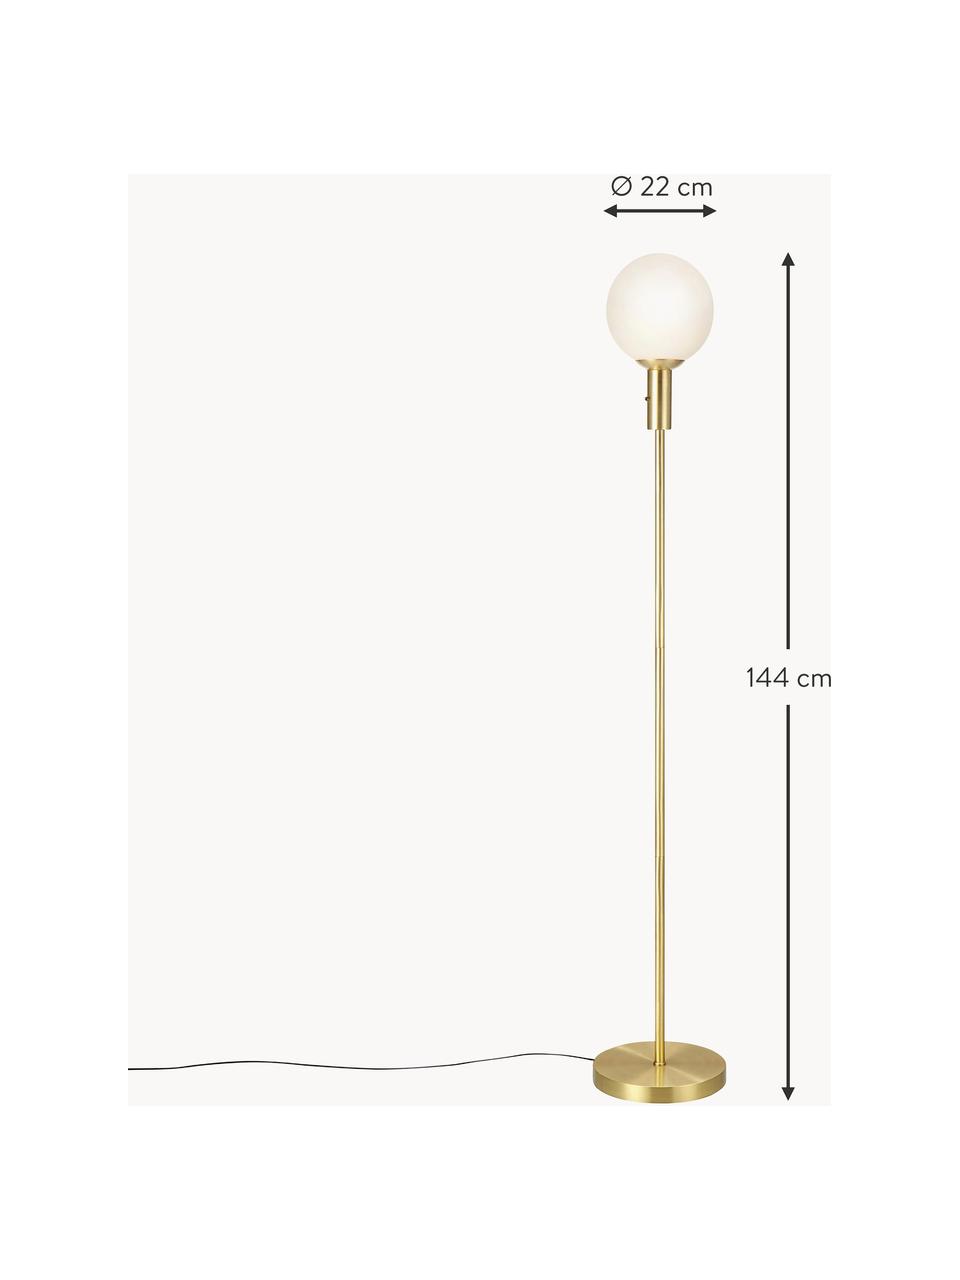 Stehlampe Minna aus Opalglas, Lampenschirm: Opalglas, Lampenfuß: Metall, vermessingt, Goldfarben, Weiß, H 144 cm